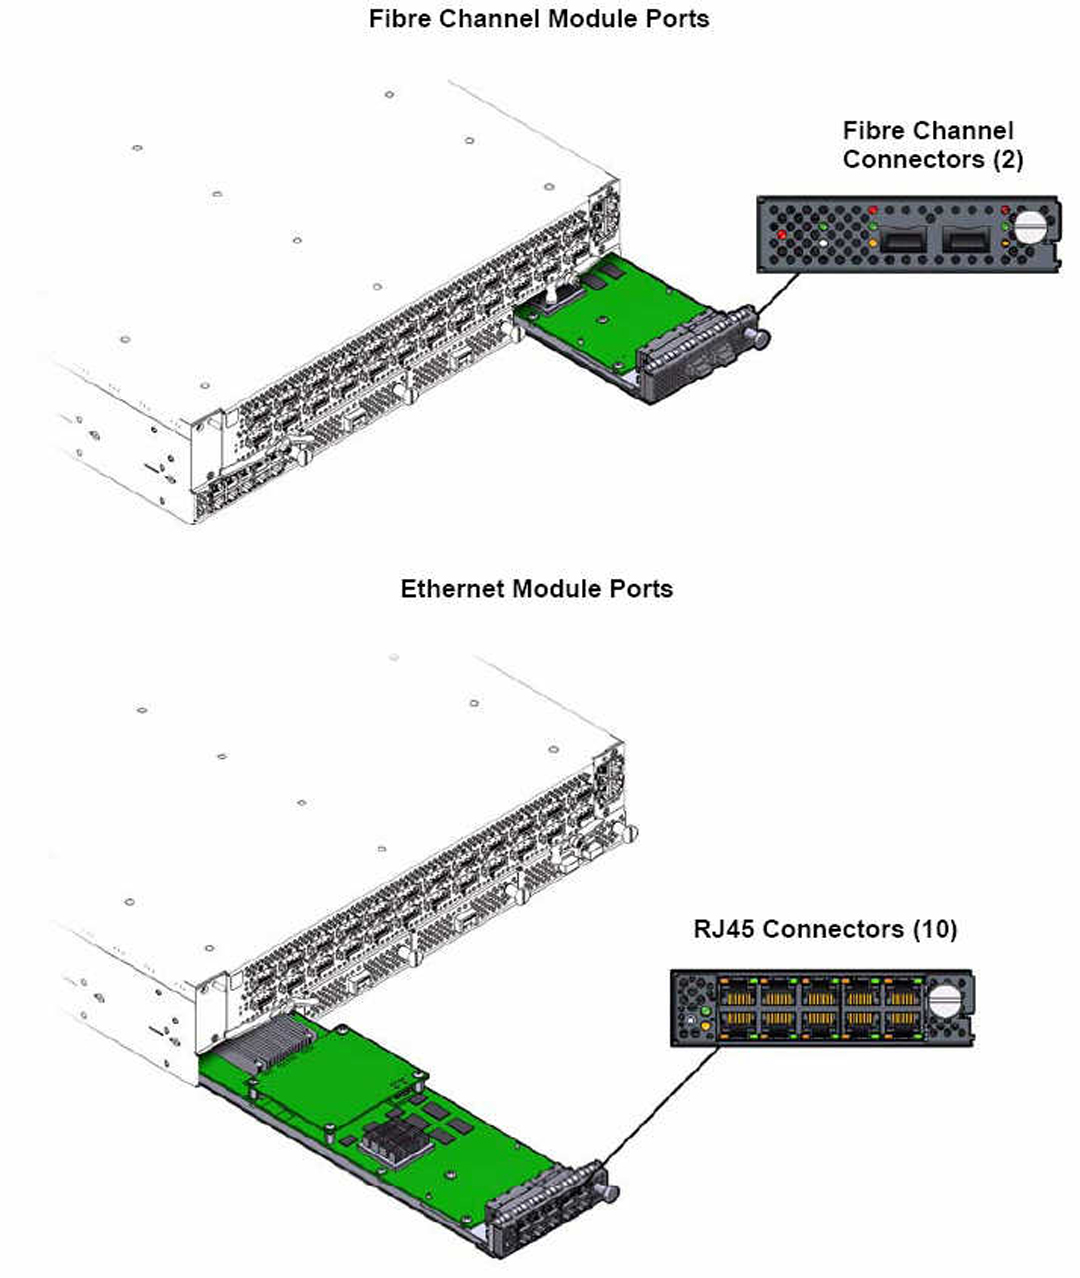 image:Figure shows two connectors on the fibre channel module. The Ethernet module has two rows of five RJ45 connectors.